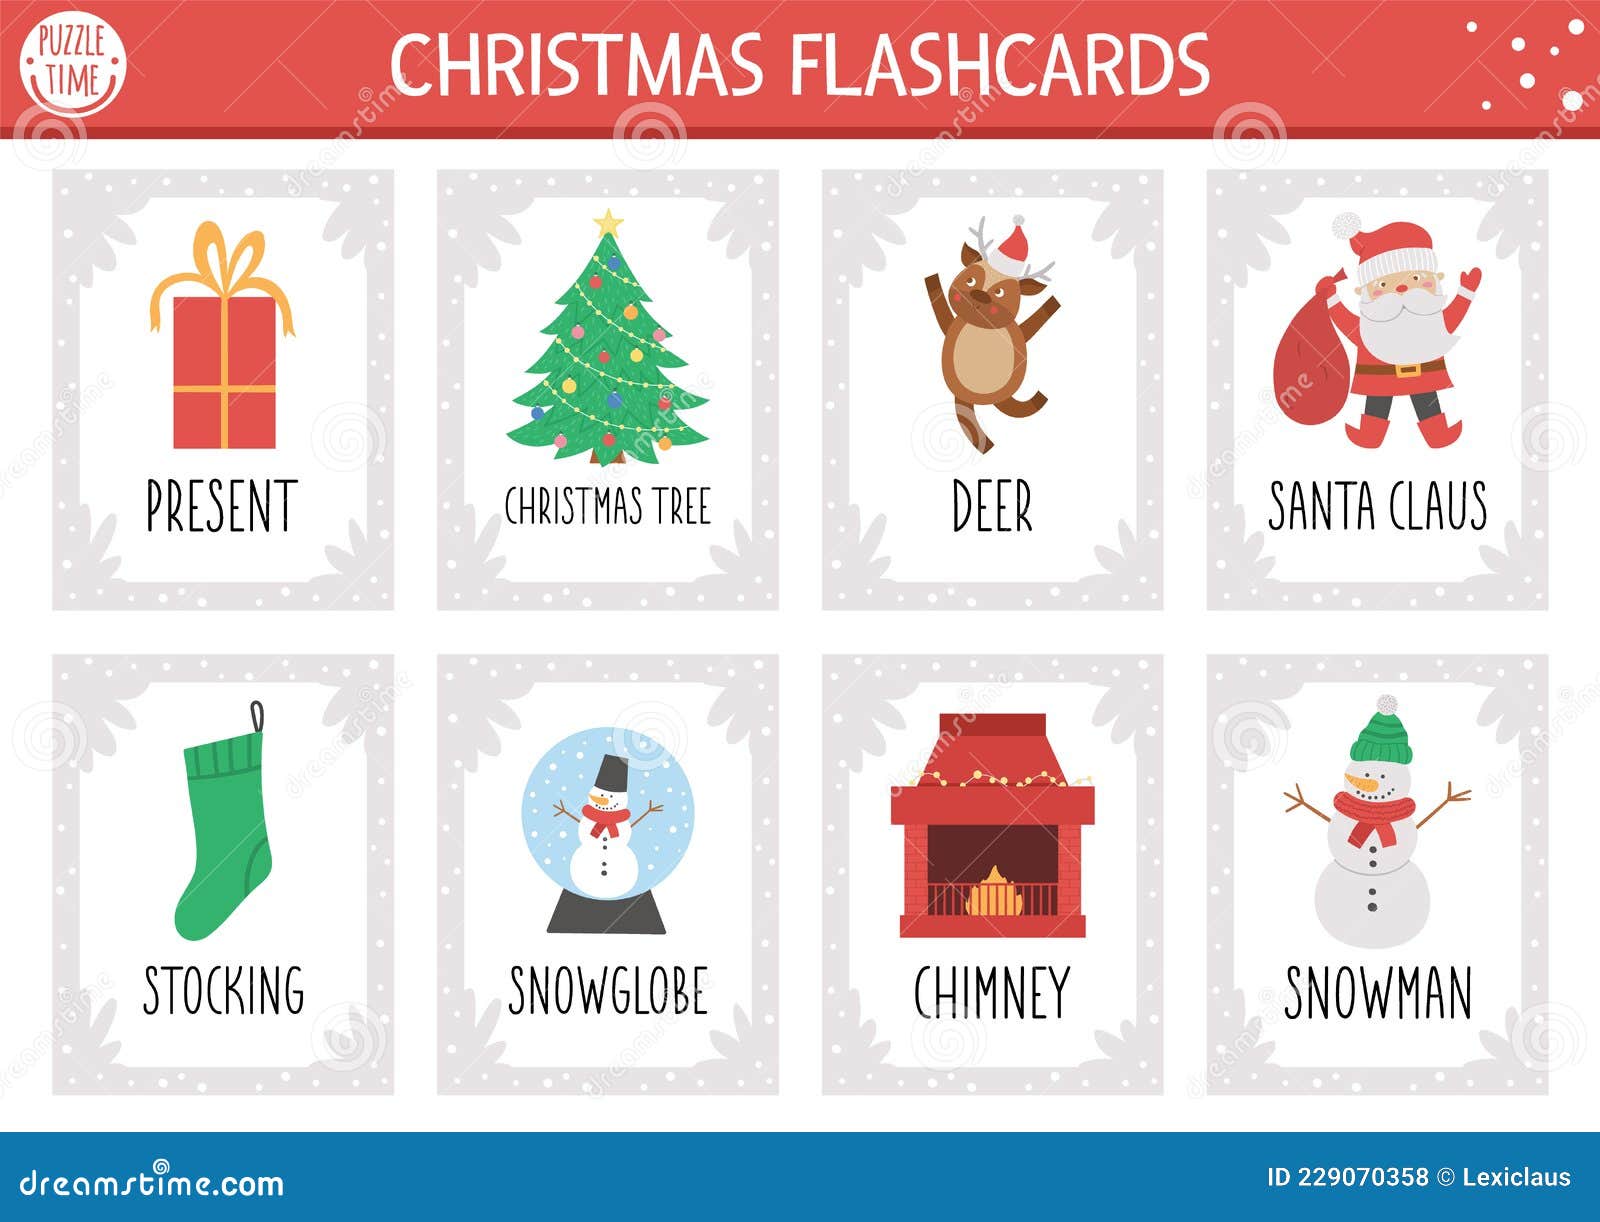 Christmas Flashcards - Free Printable Flashcards to Download